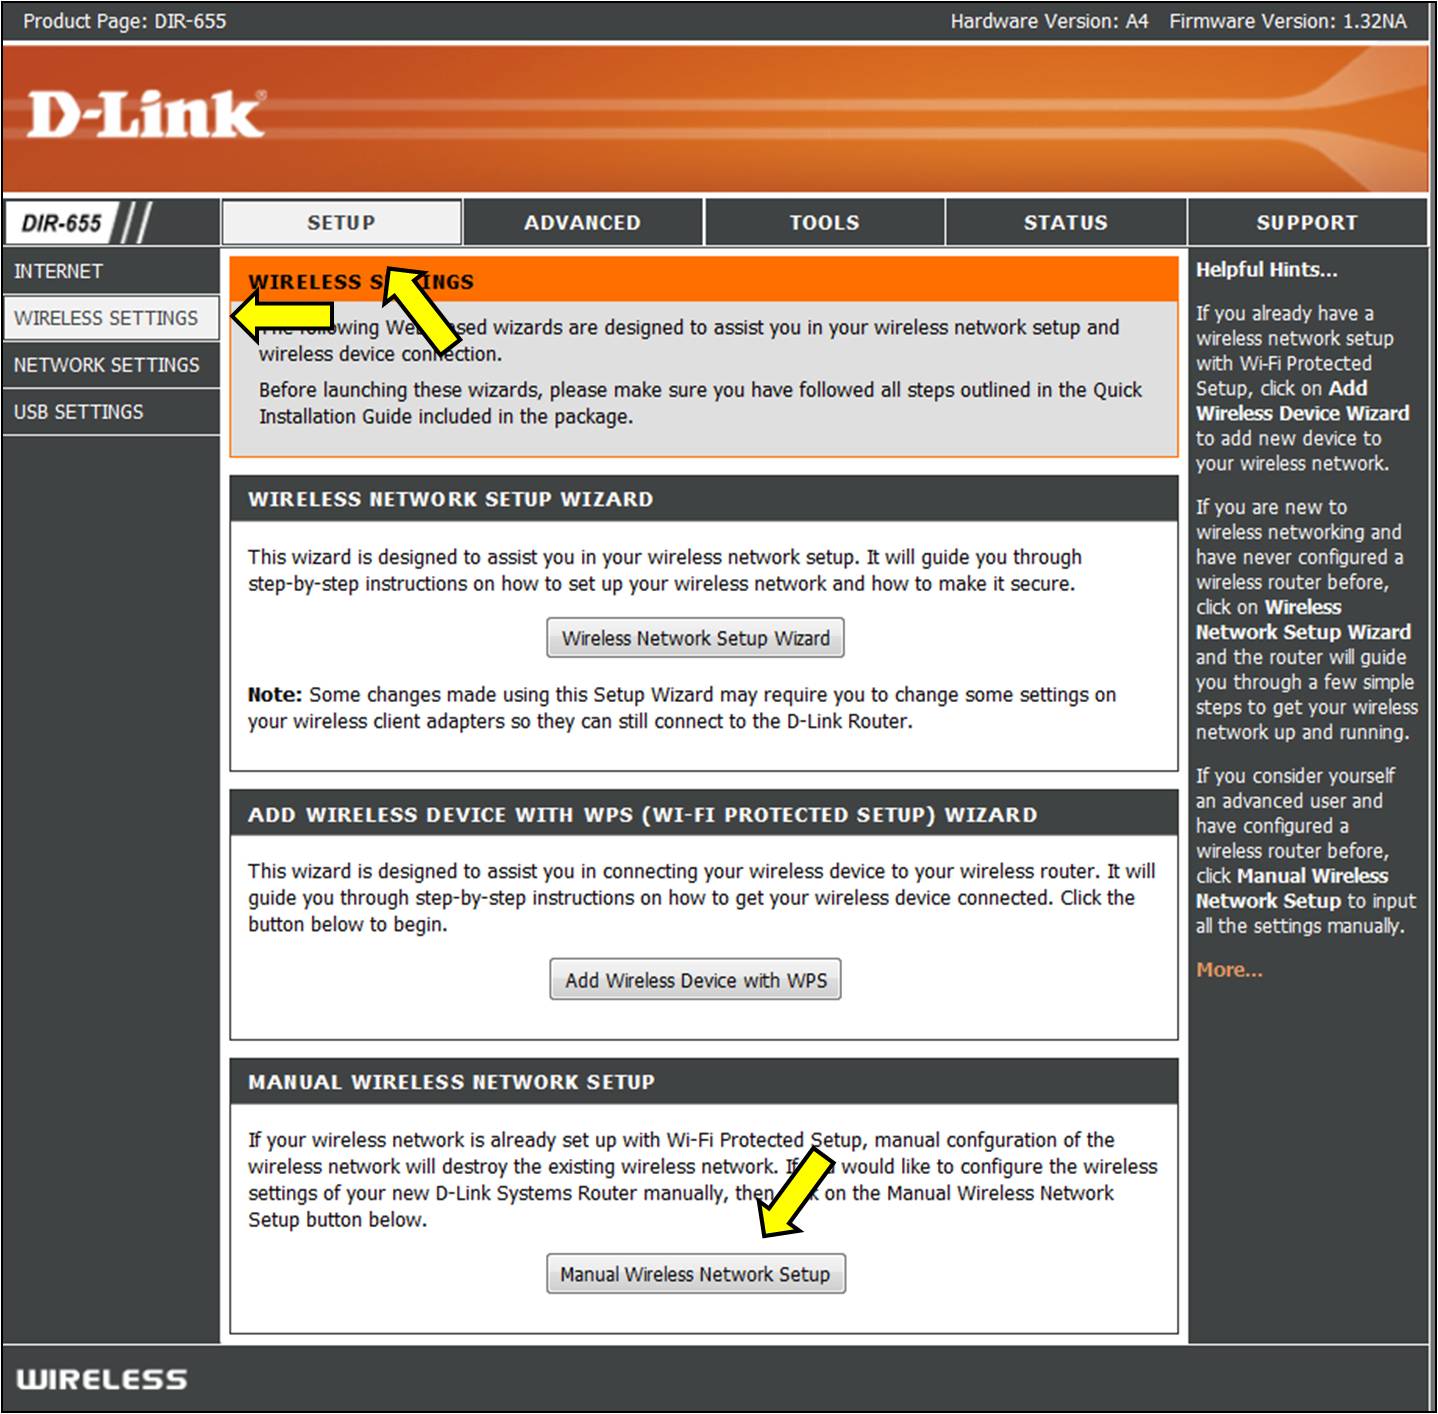 d-link resolve wireless